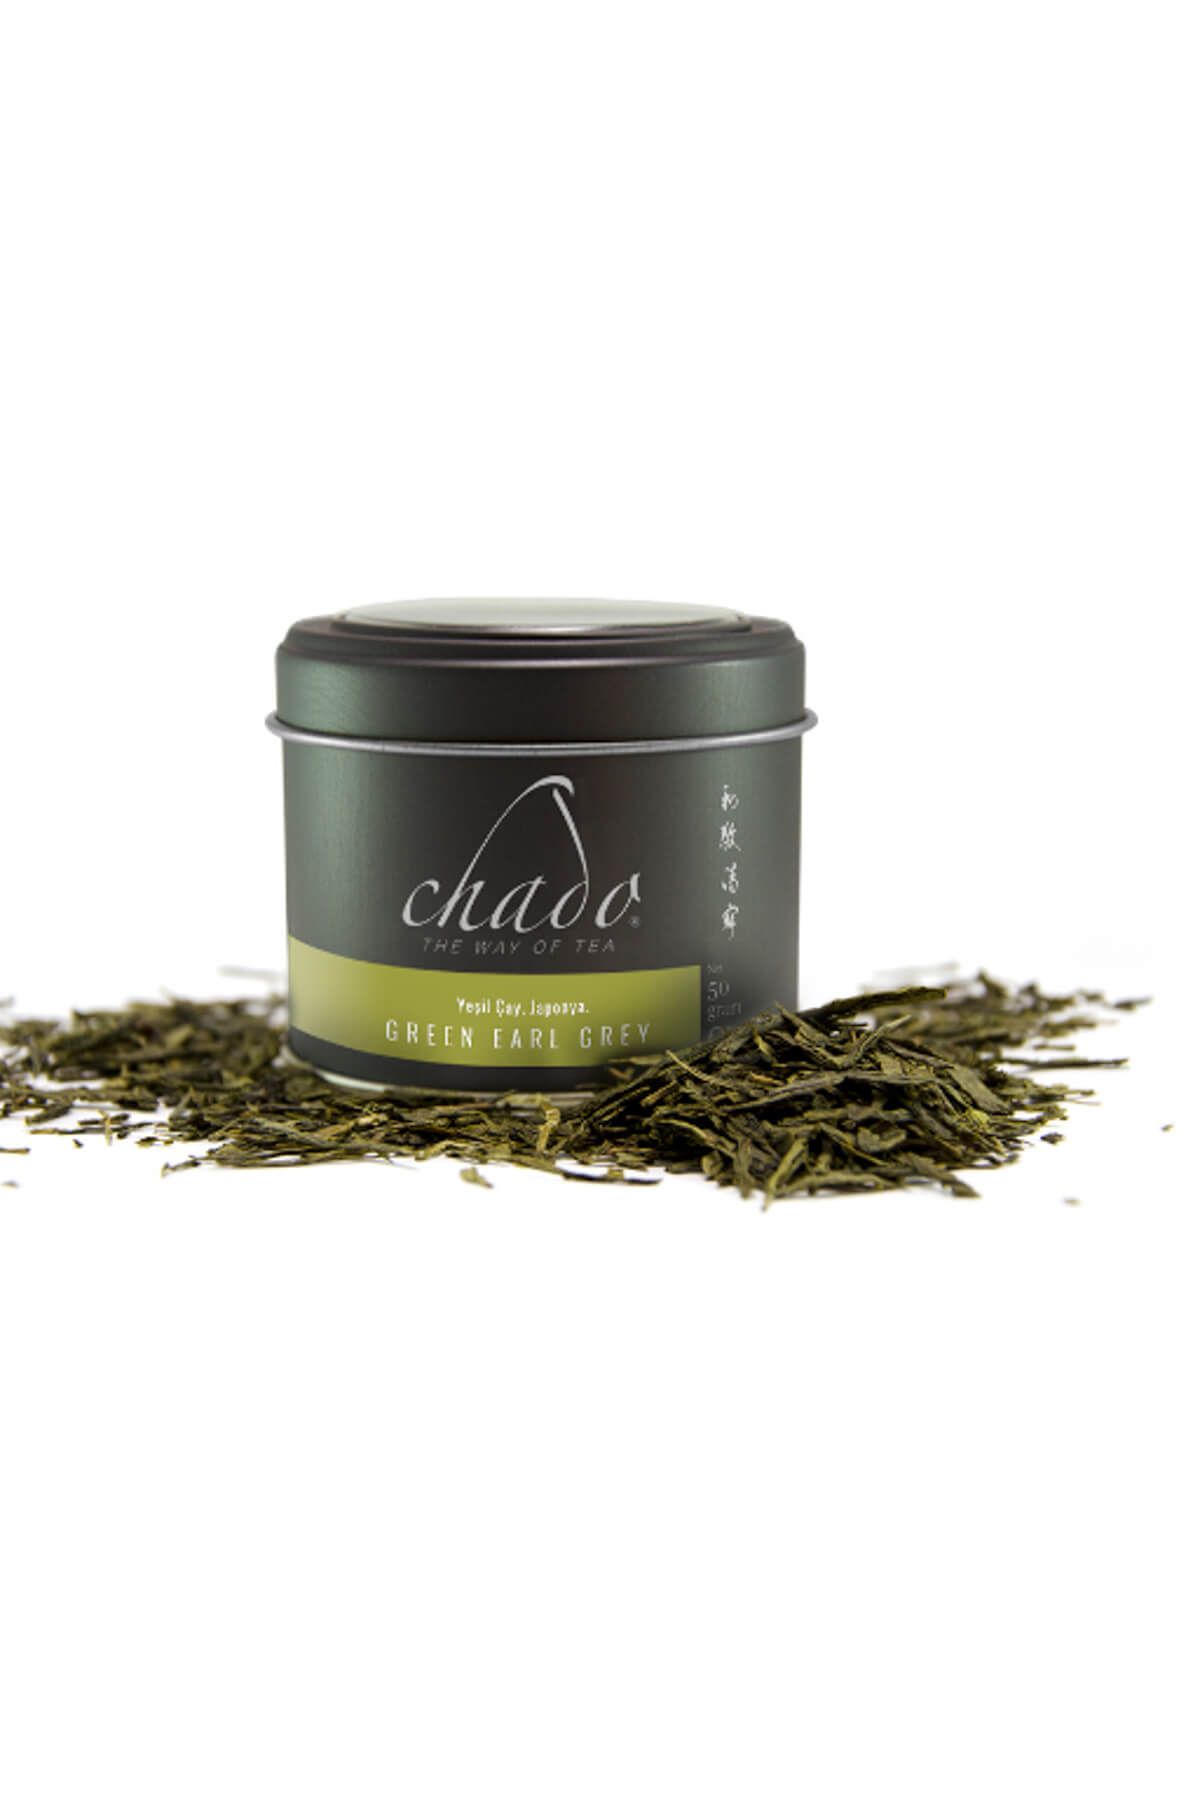 Chado Tea Green Earl Grey - Bergamutlu Yeşil Çay Harmanı 50 gr